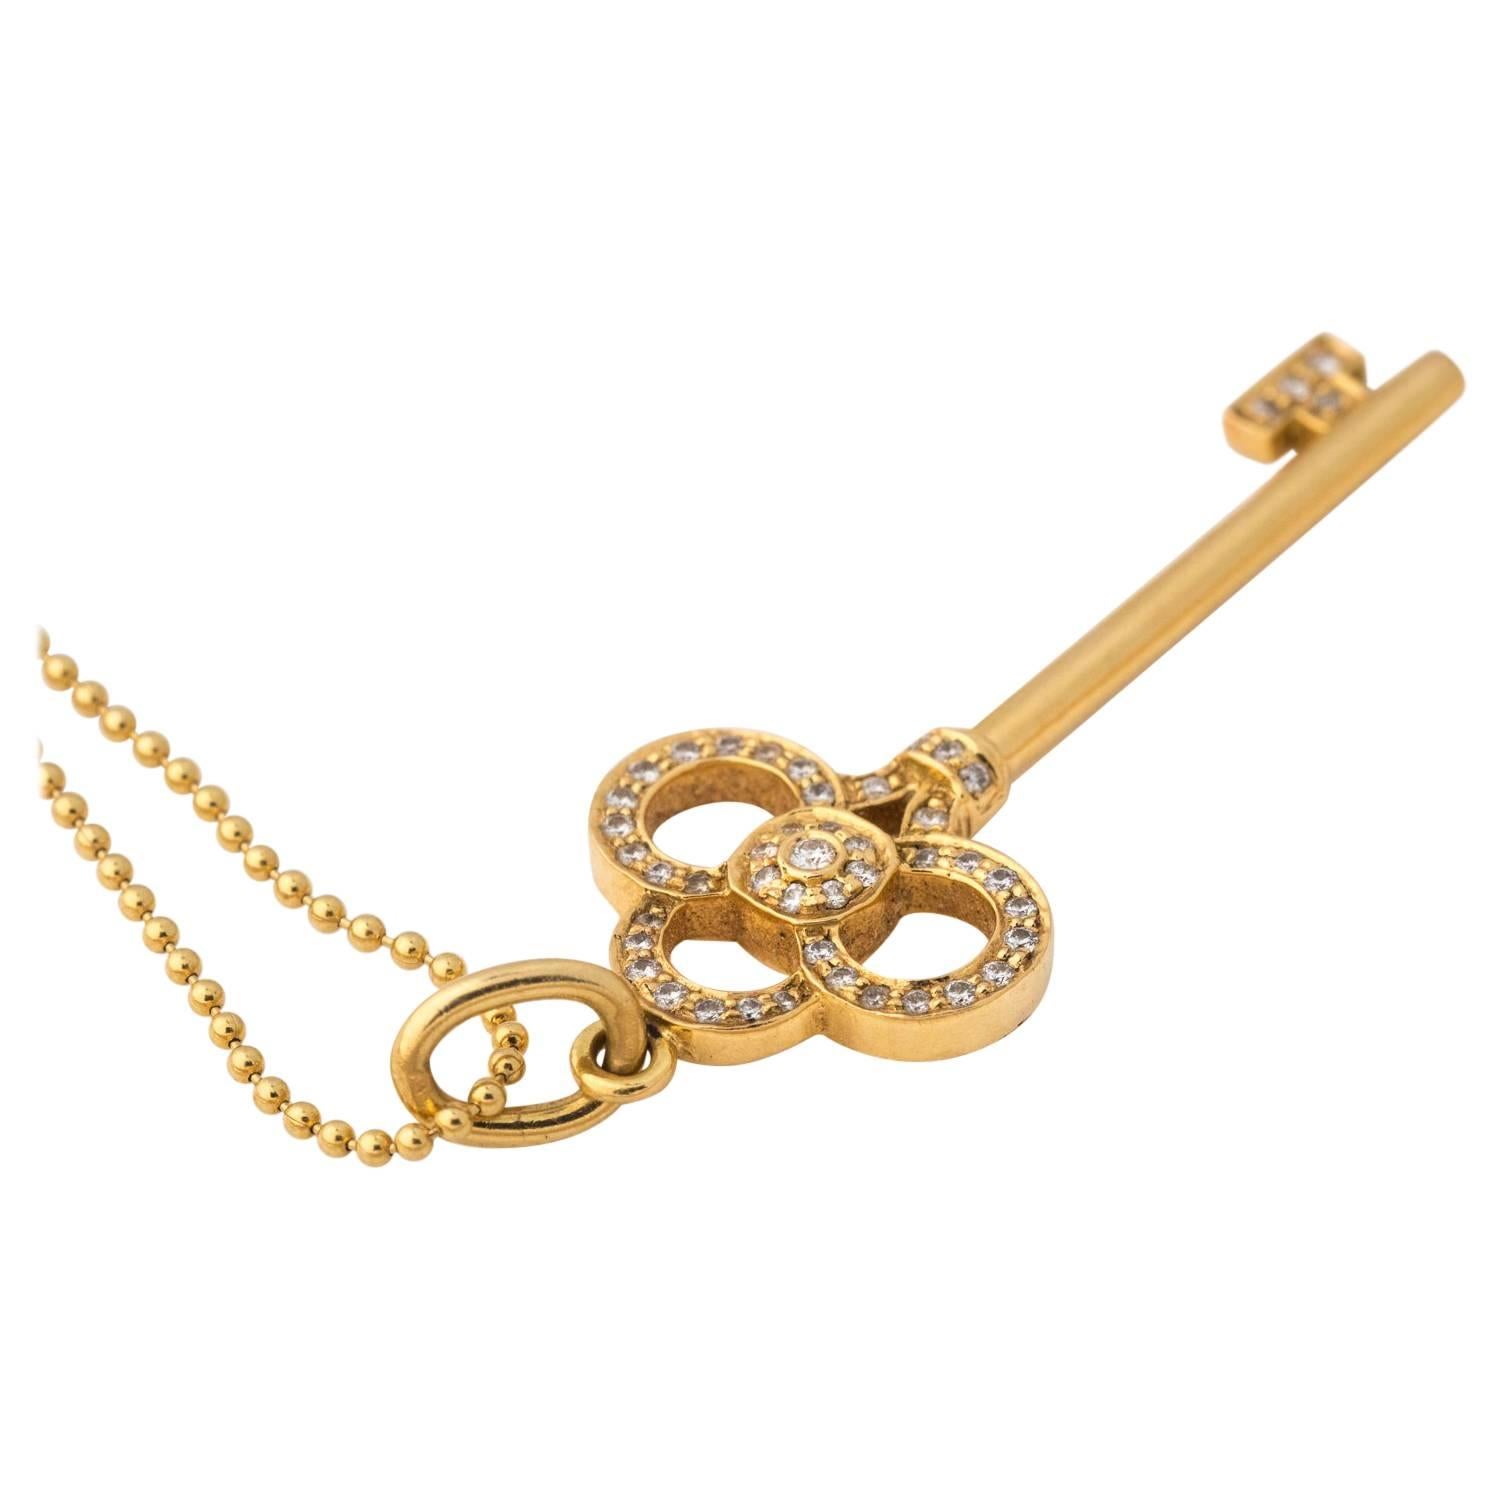 Tiffany & Co. Diamond Rose Gold Crown Key Pendant Necklace